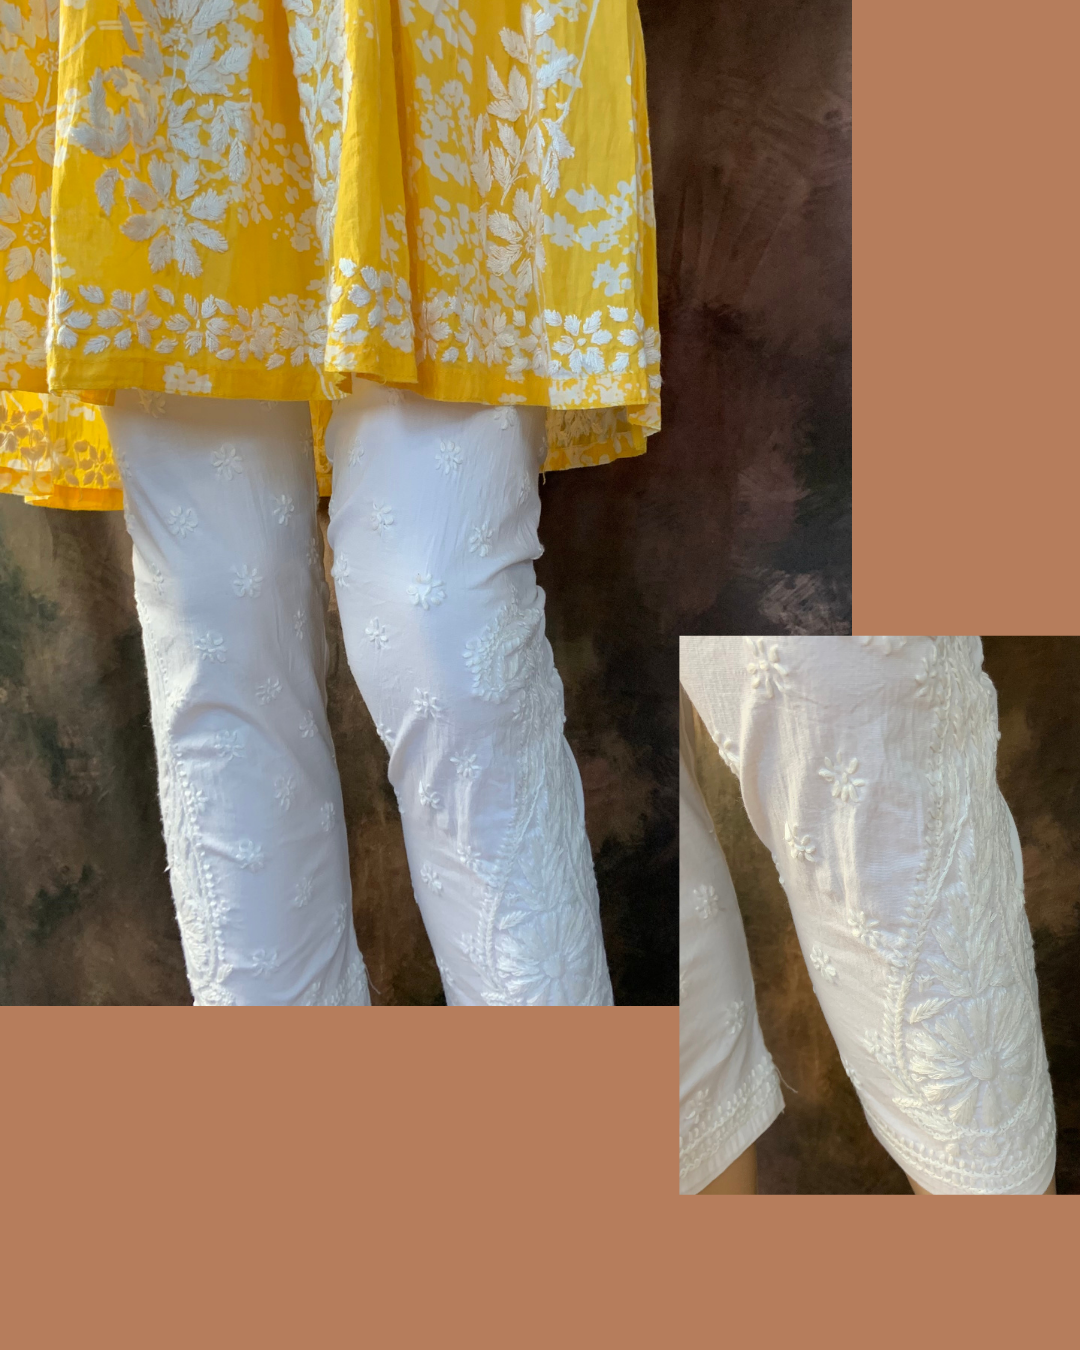 Shop Trendy Pant Salwar Suits Online | Zeel Clothing